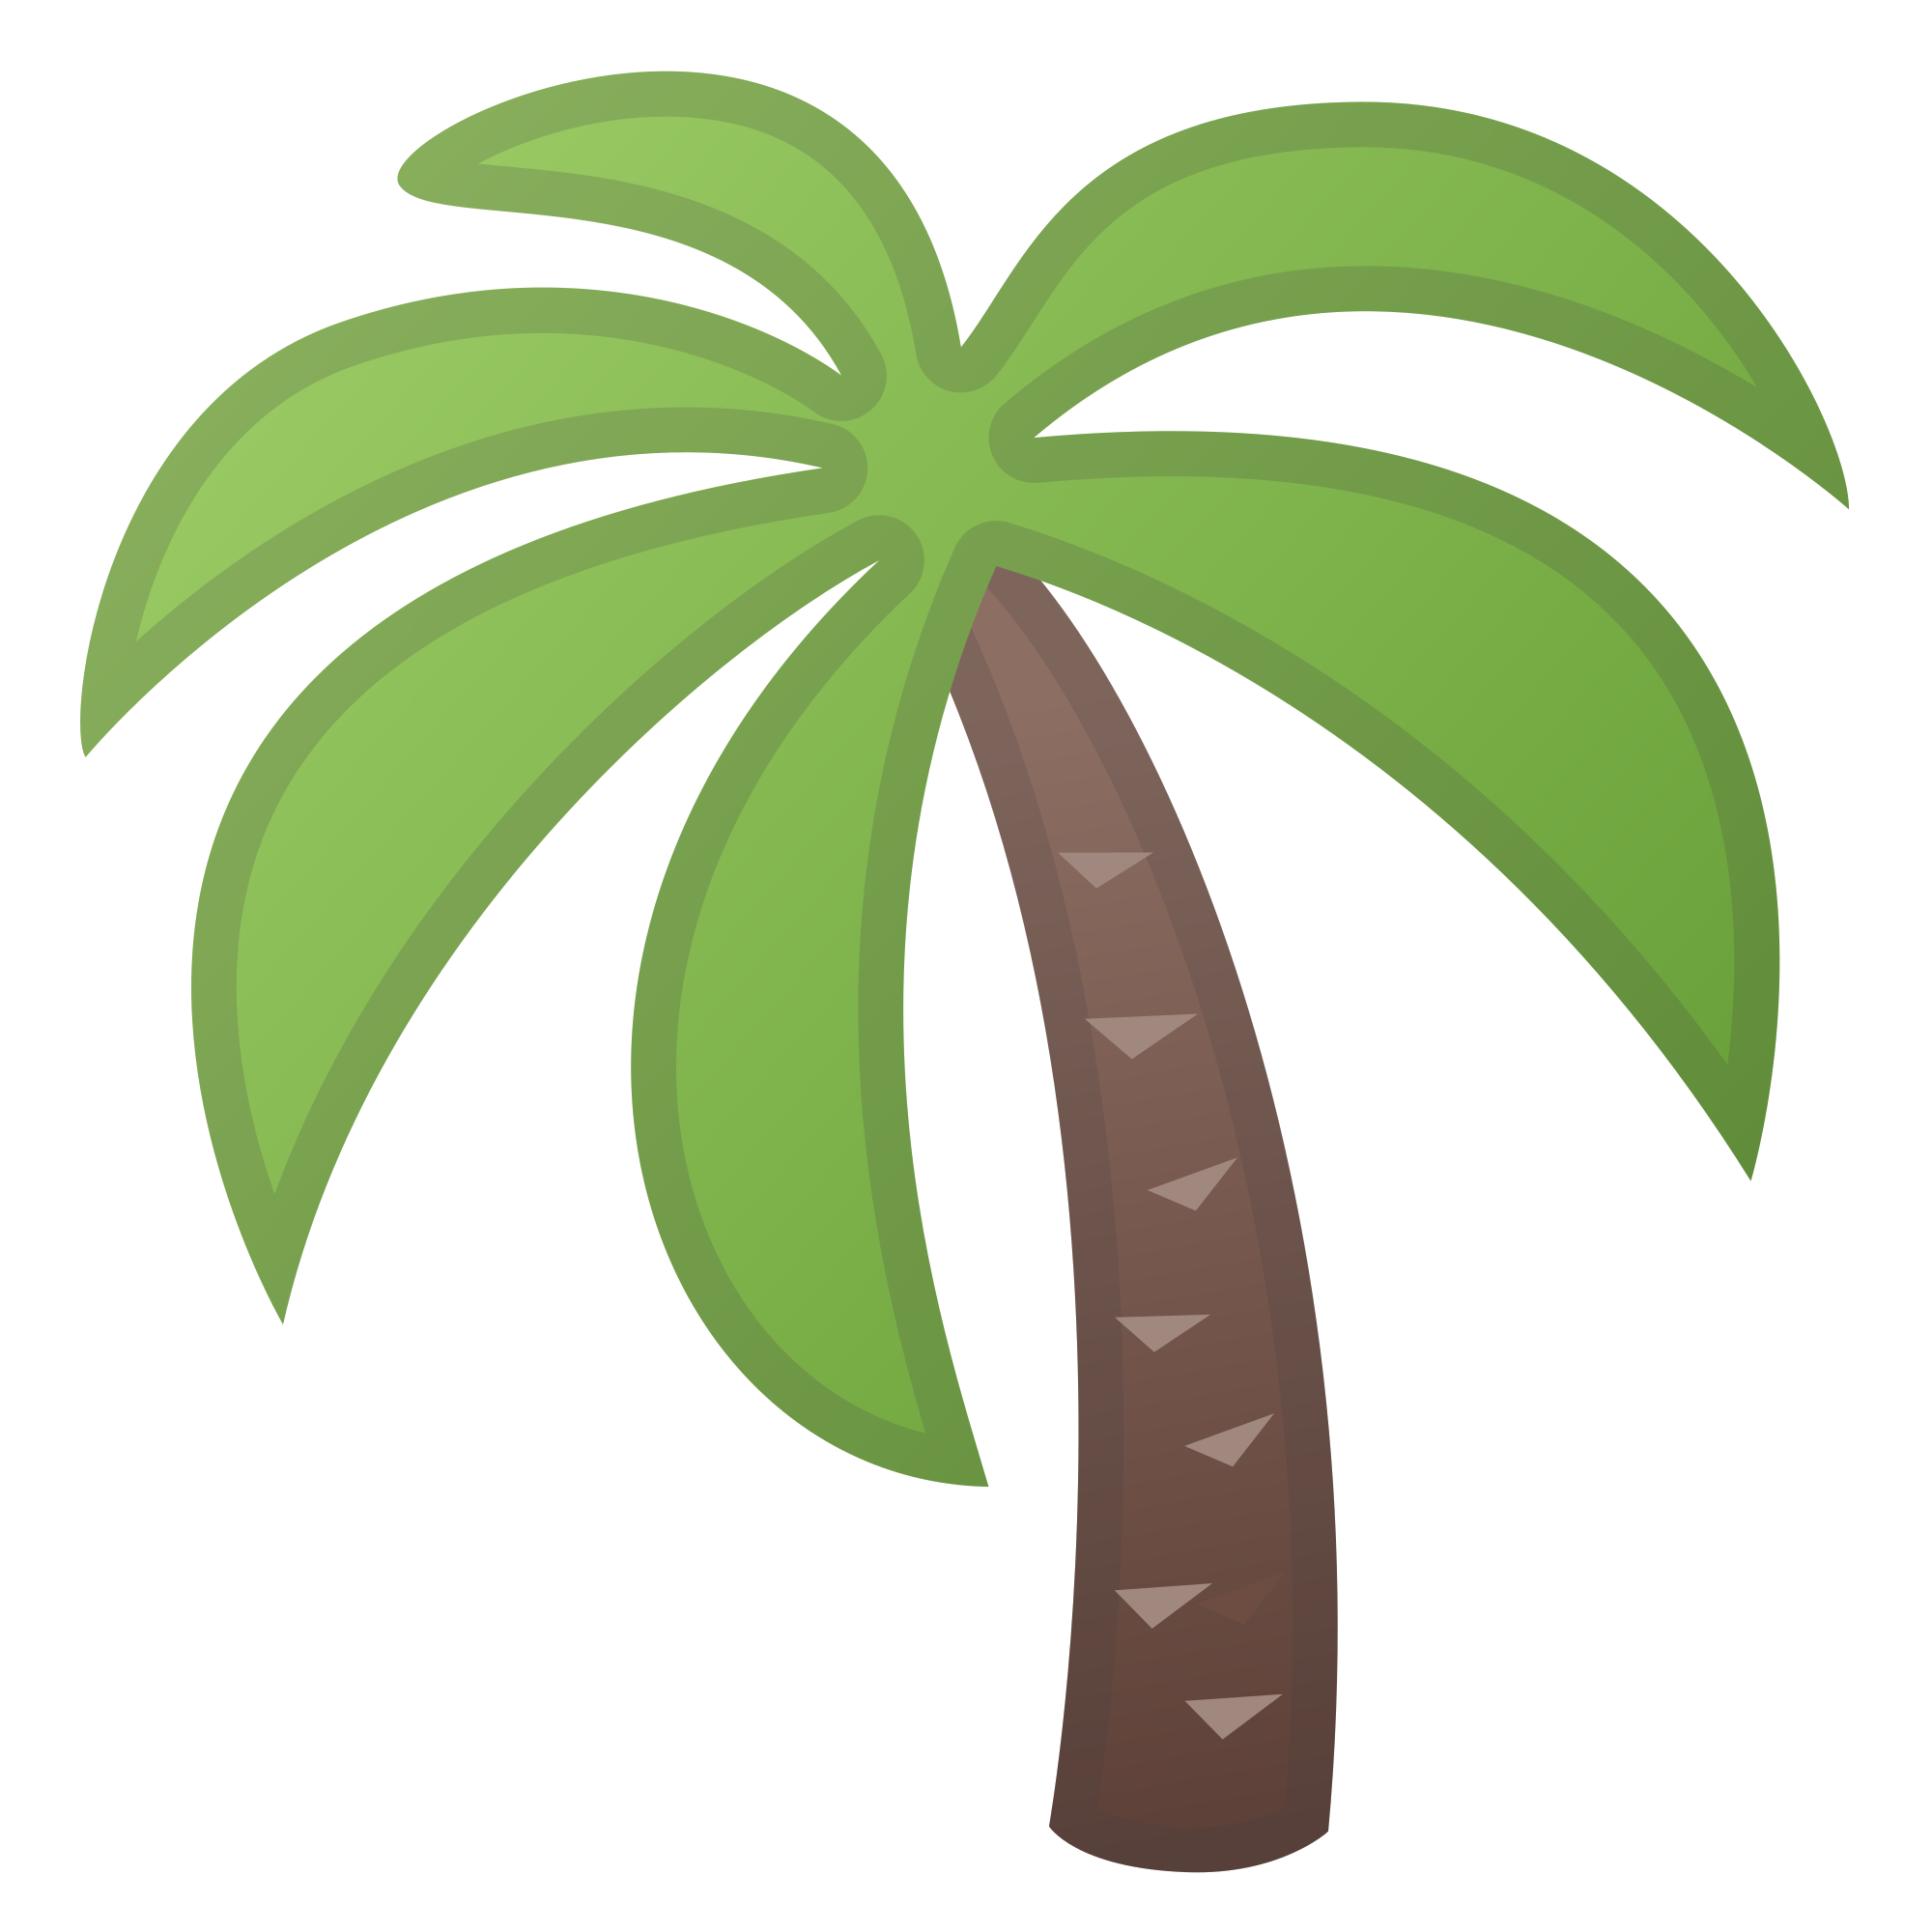 emoji clipart palm tree